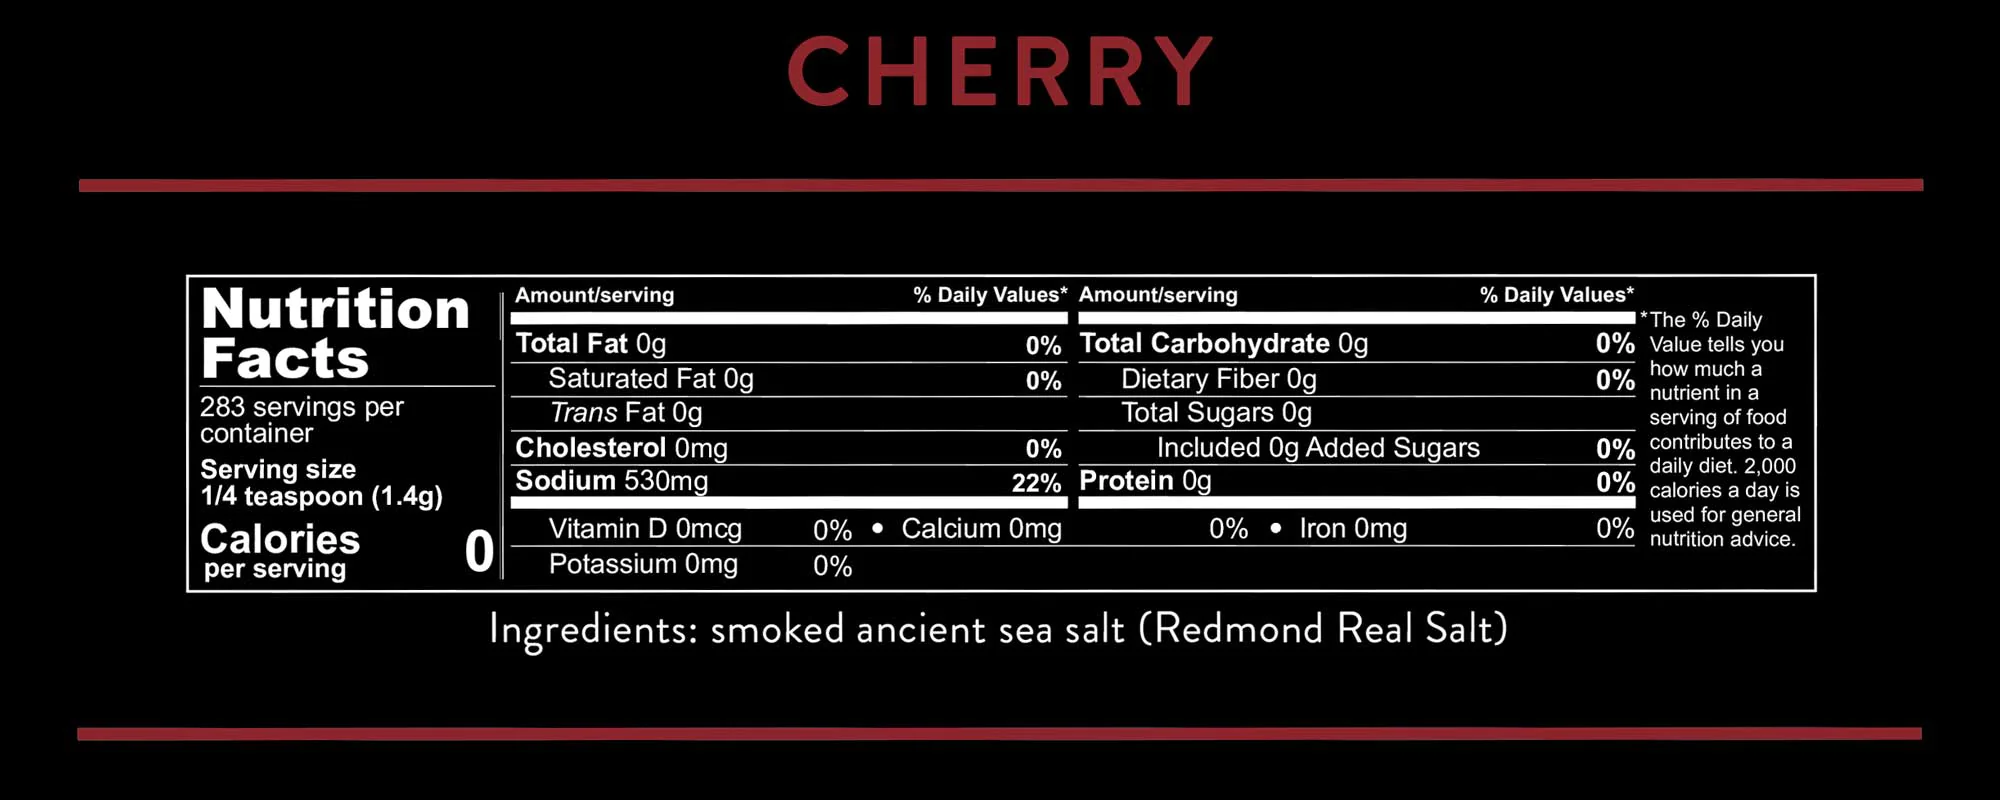 Cherry ingredients: smoked ancient sea salt (Redmond Real Salt)